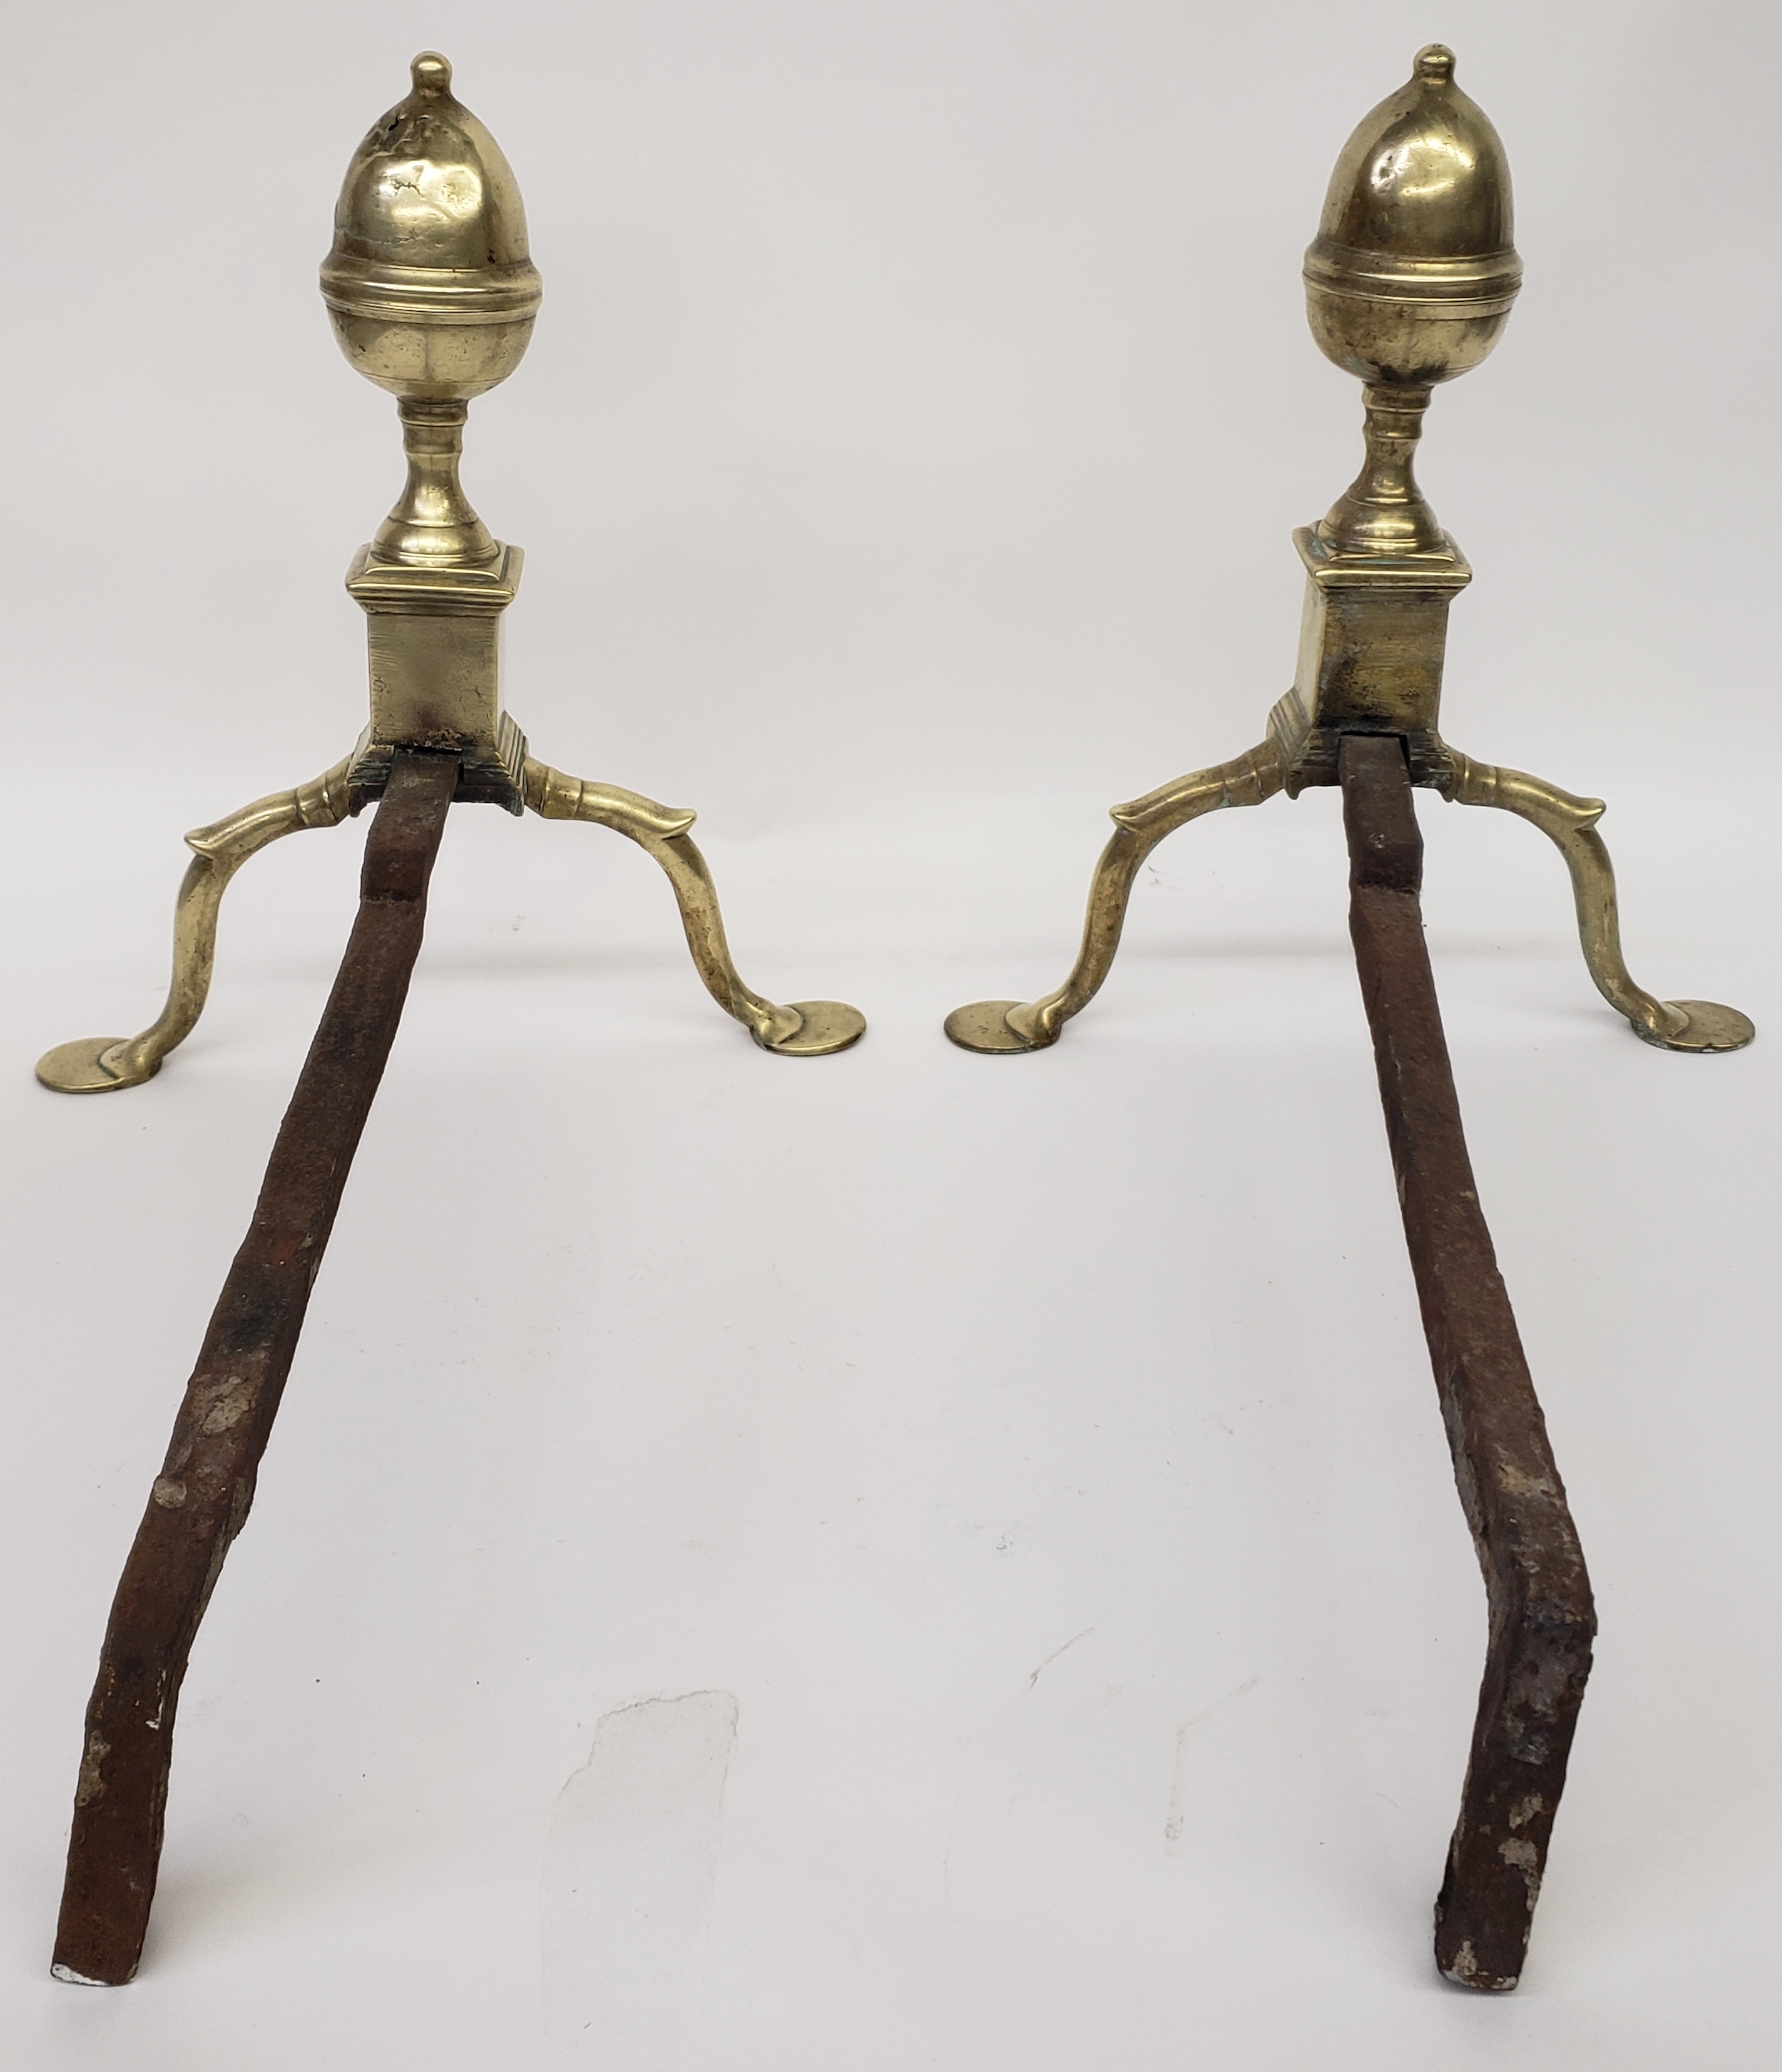 Pair of Antique Brass Philadelphia Acorn and Finial Andirons, circa 1800